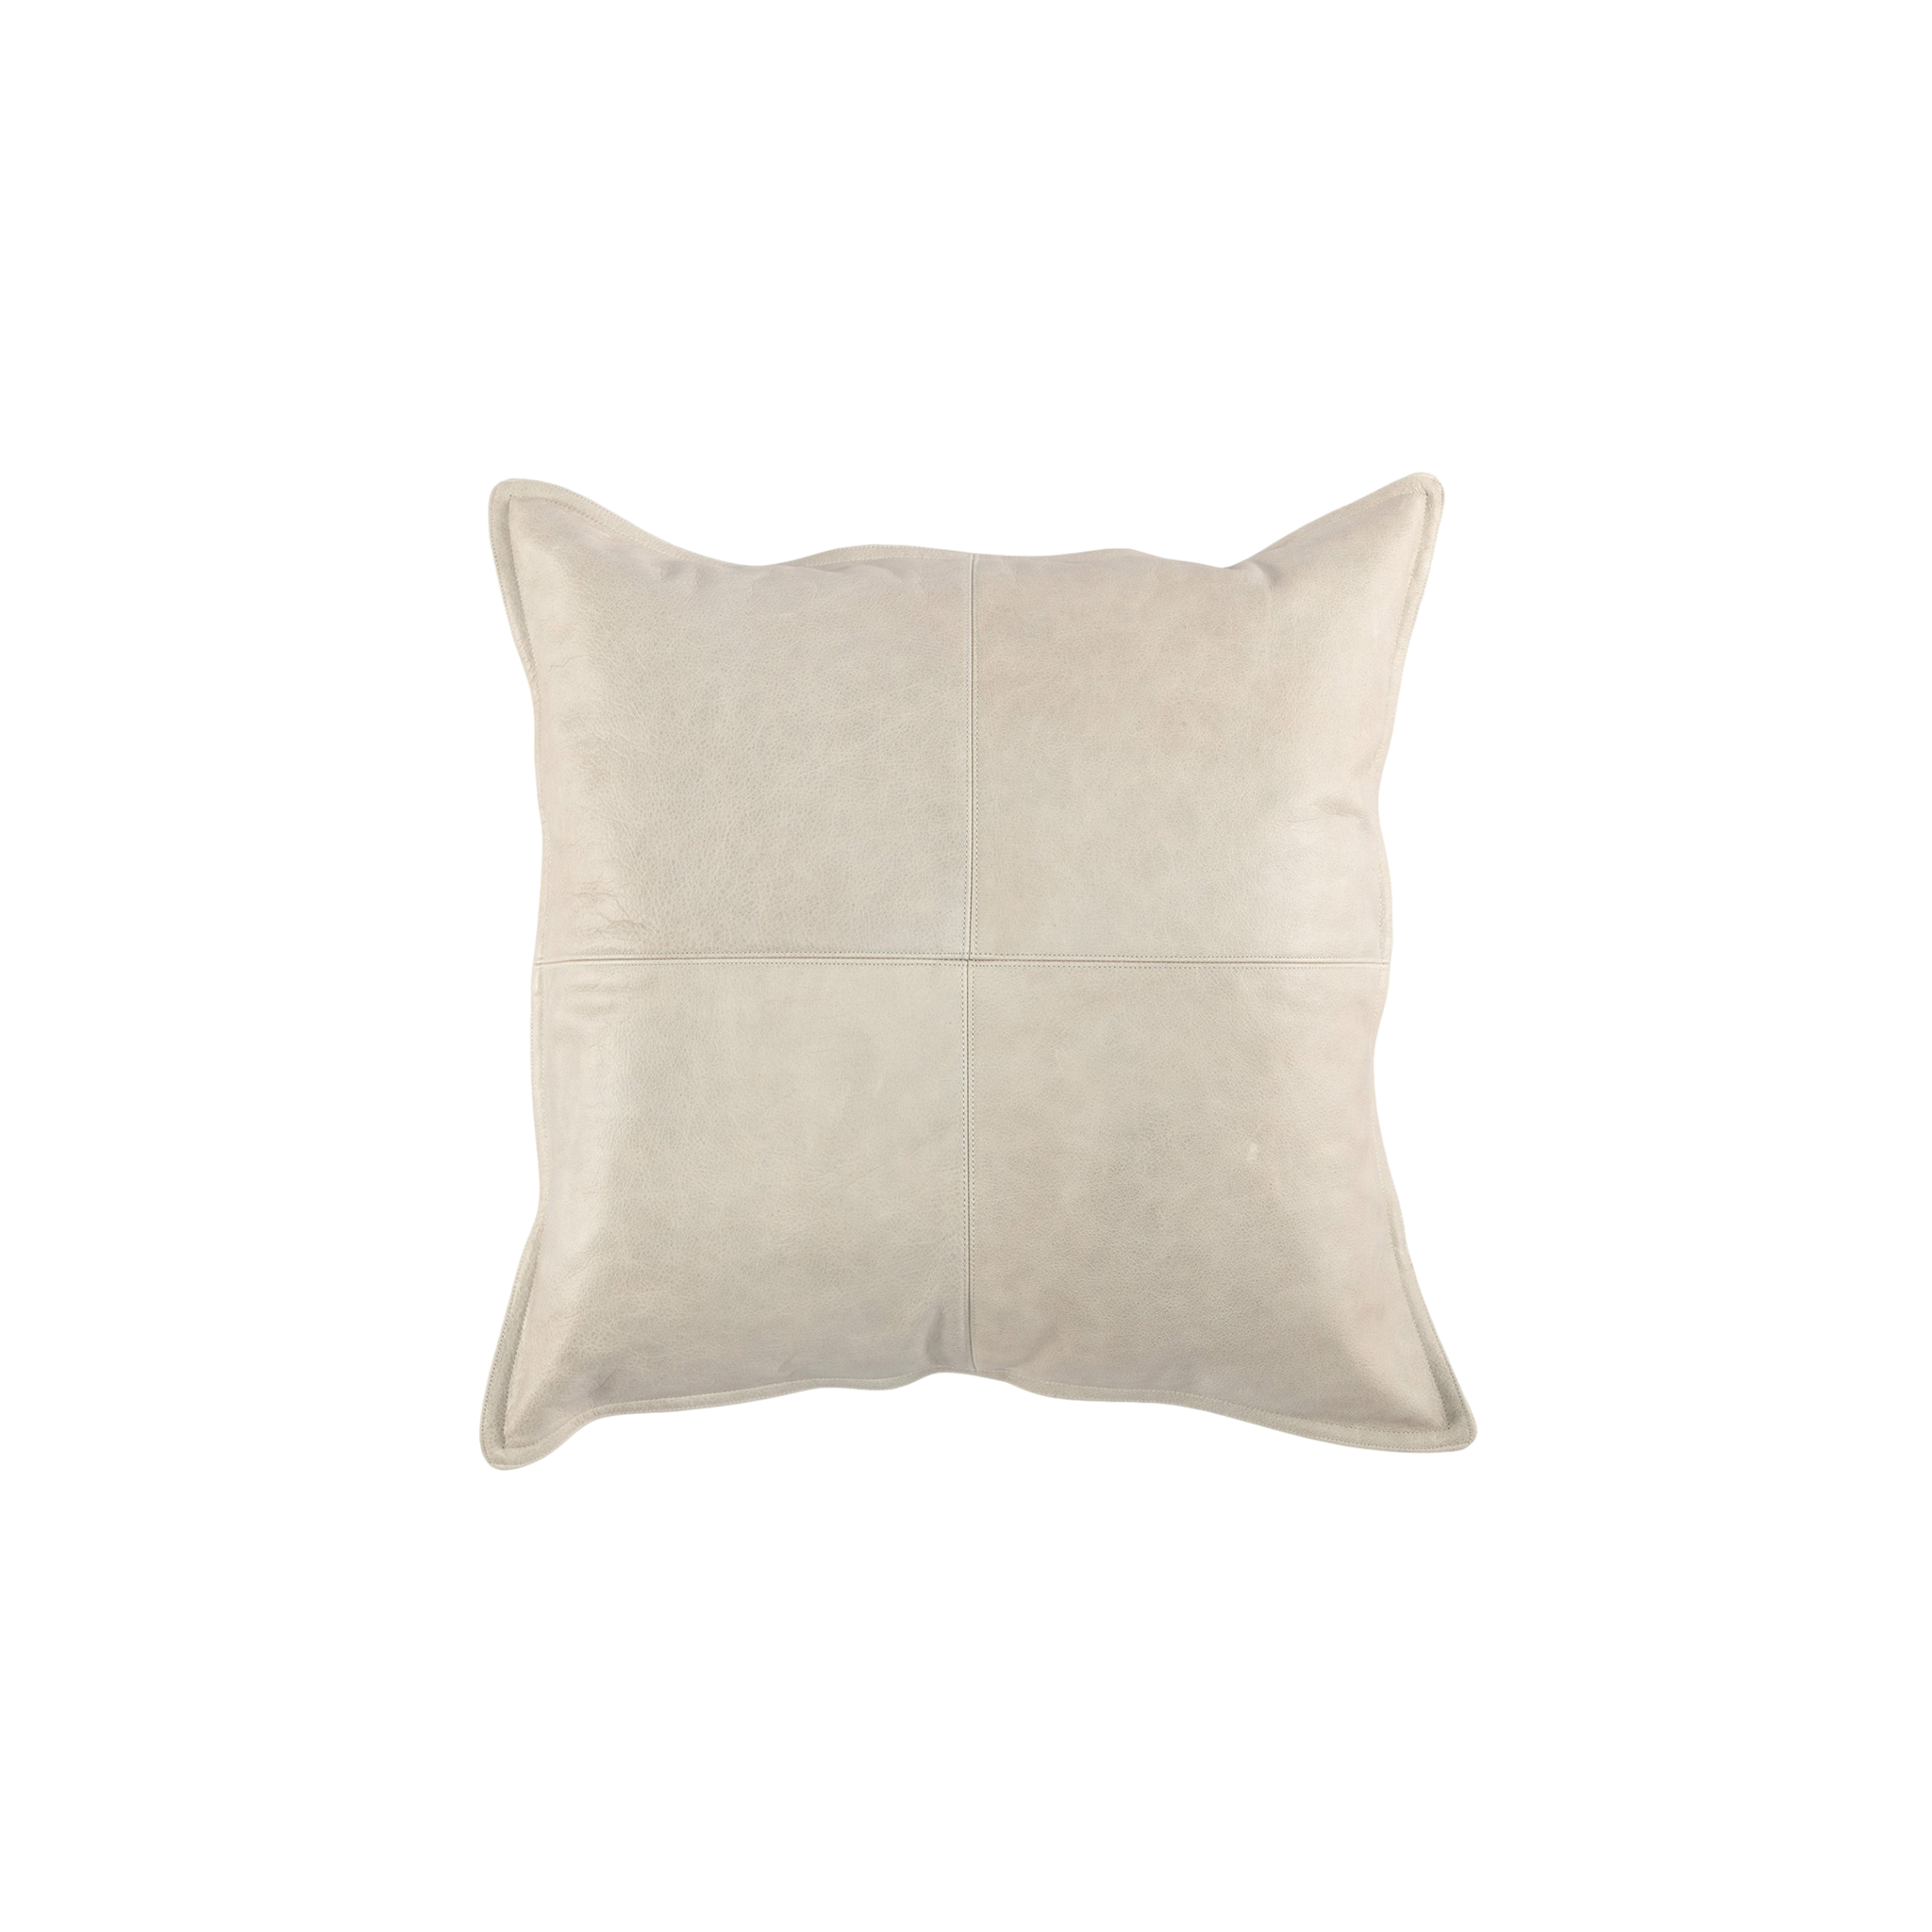 Worn Leather Pillow | Stone